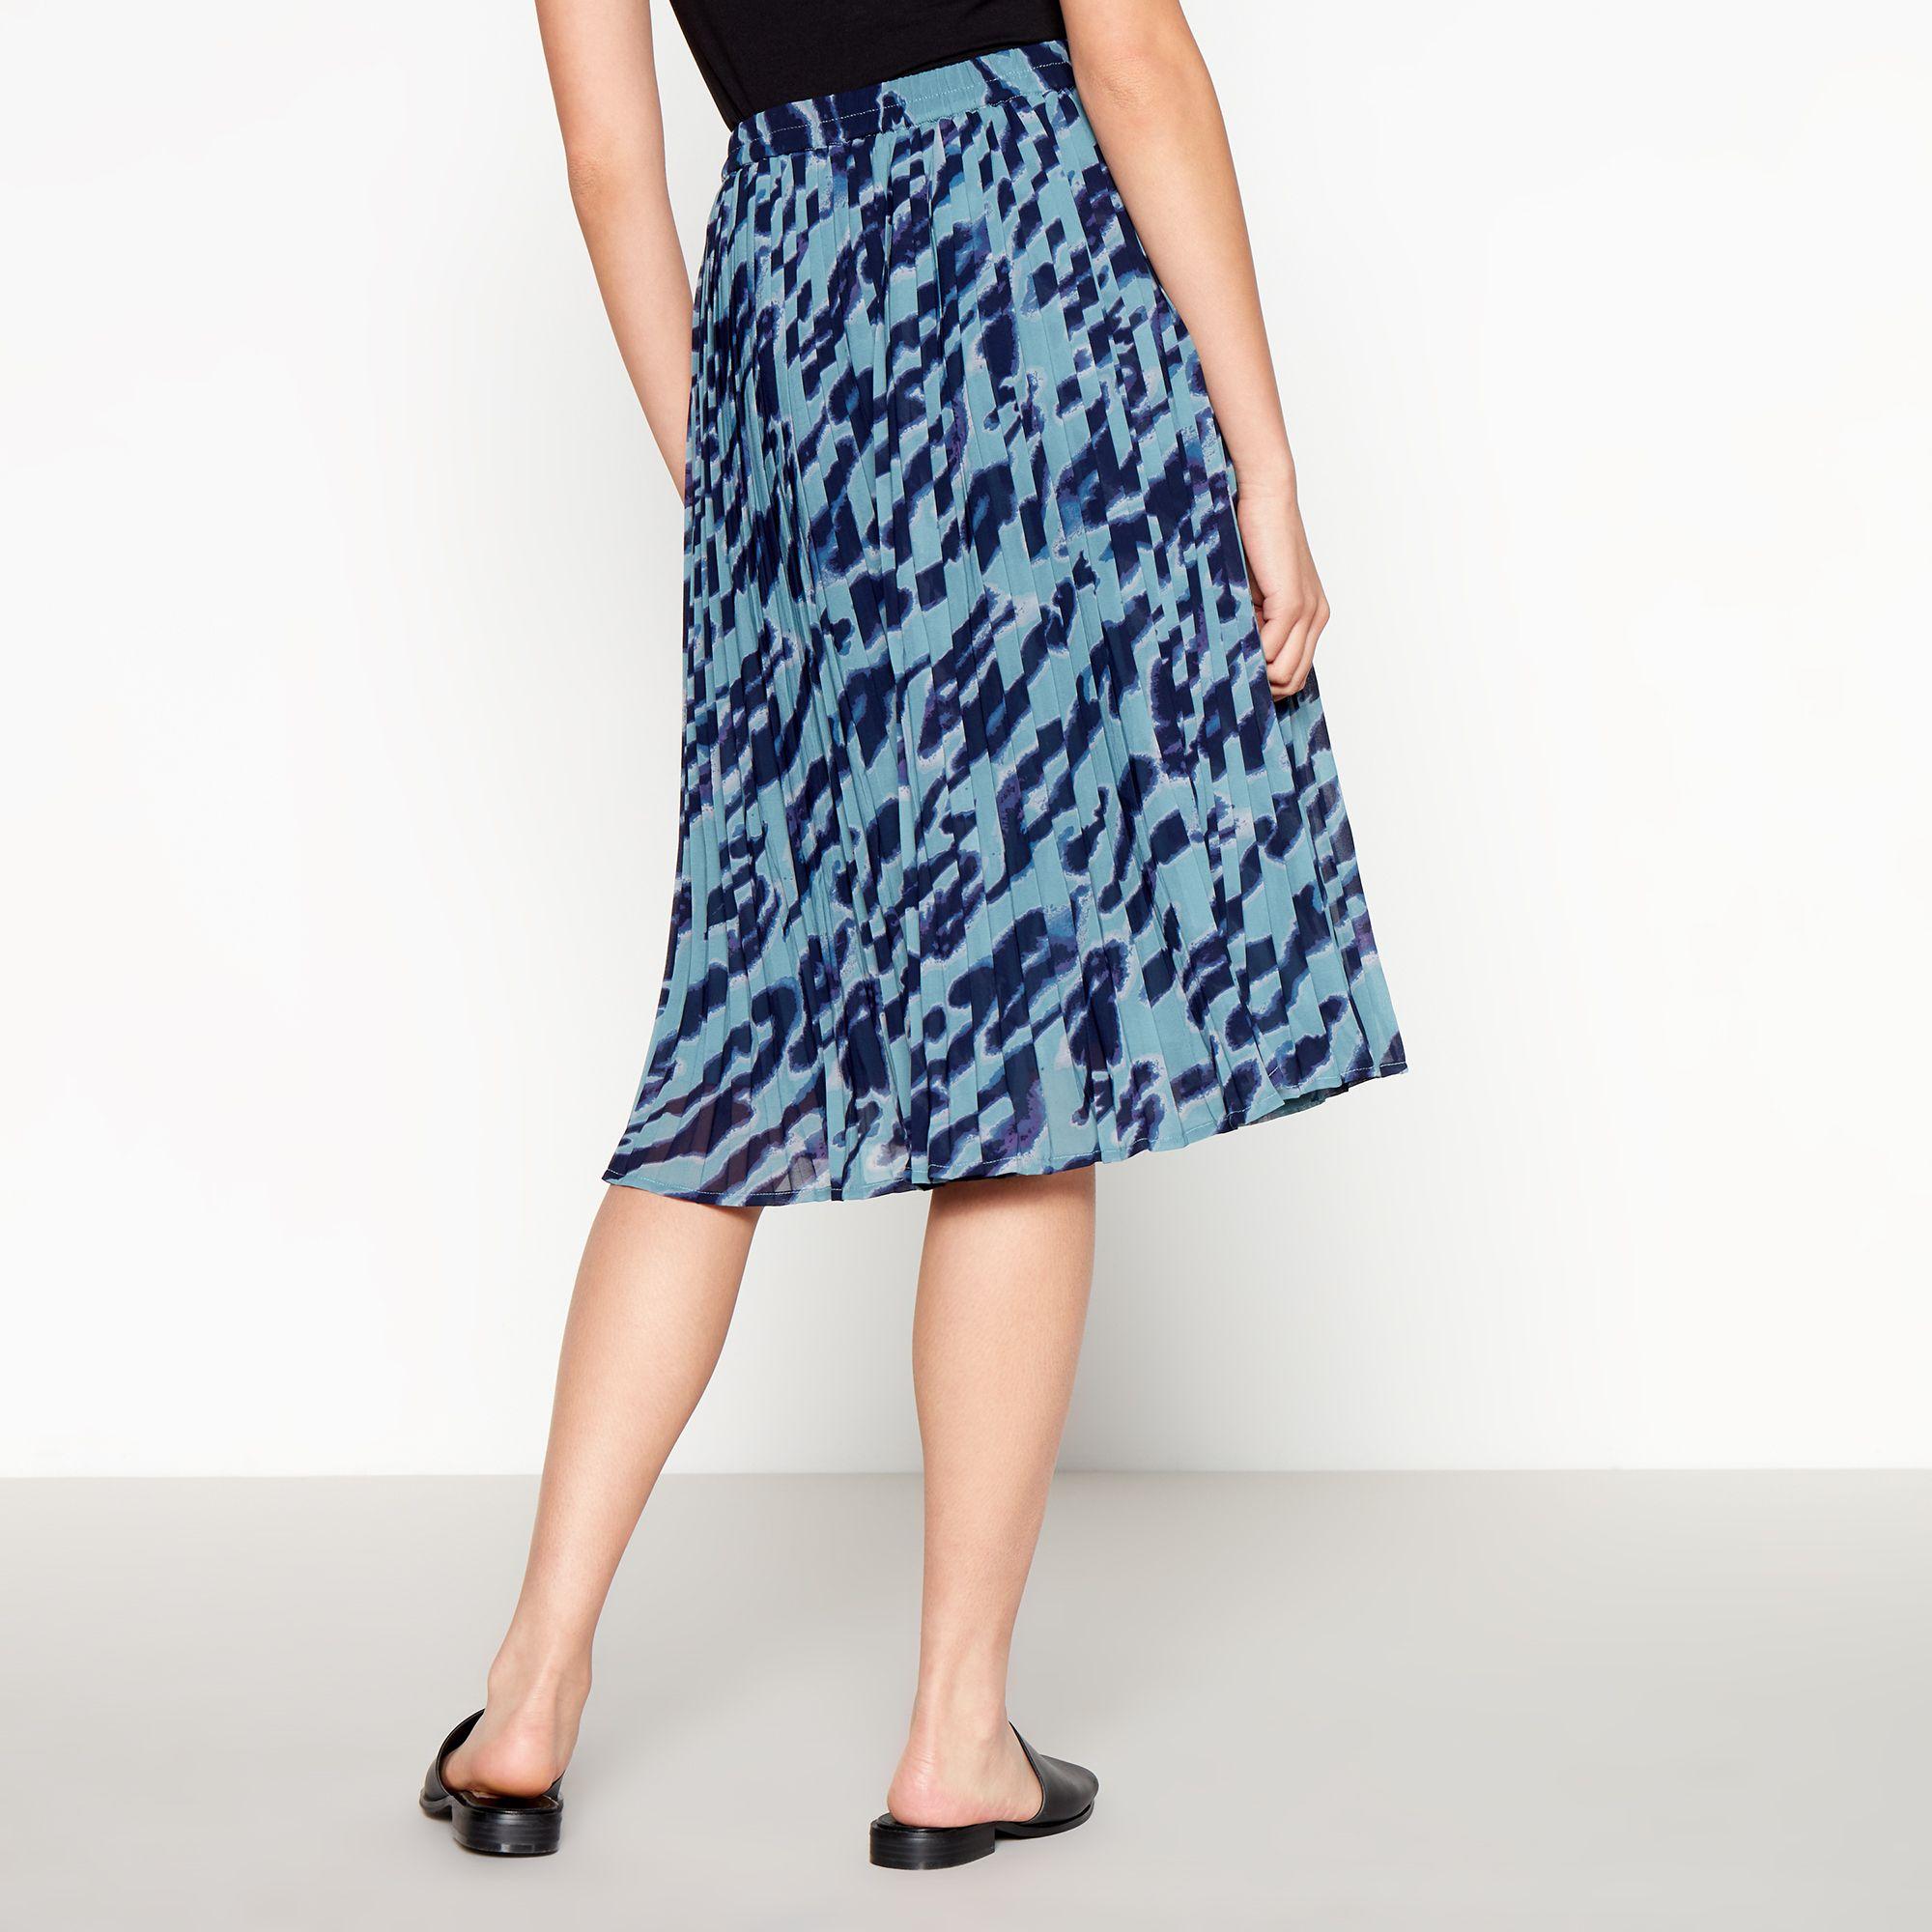 Vero Moda Leopard Print Pleated 'tanilla' Knee Length Skirt in Blue - Lyst